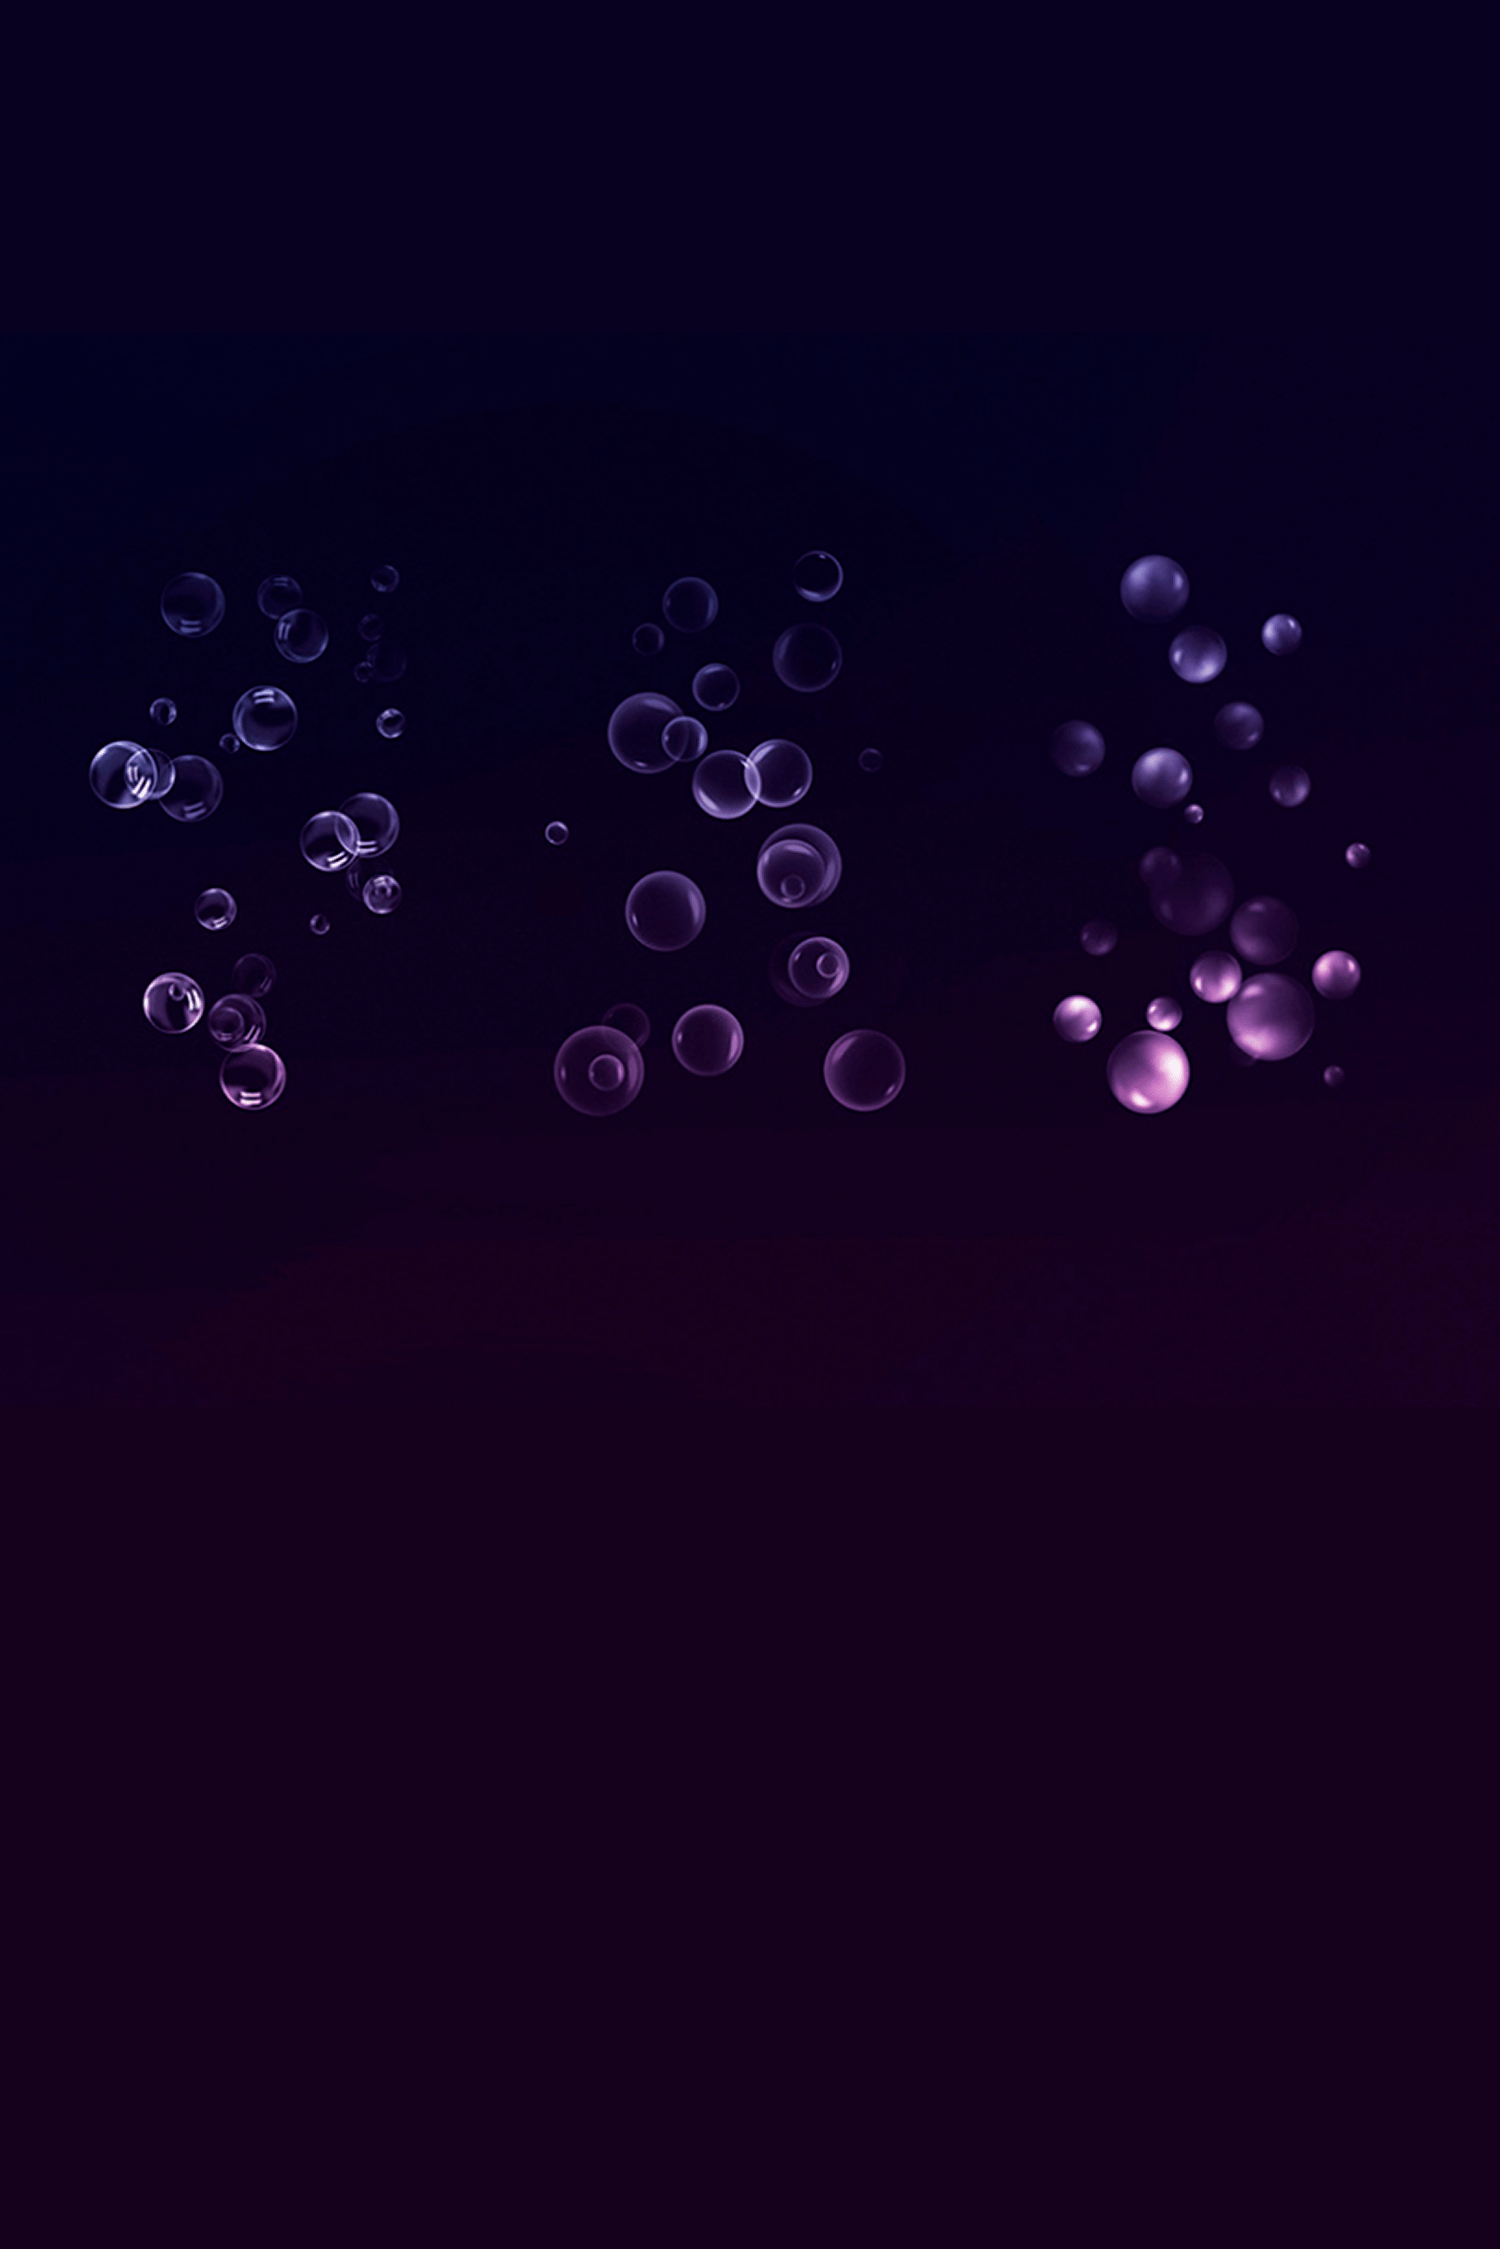 Soap Bubble Brushes by PixelBuddha